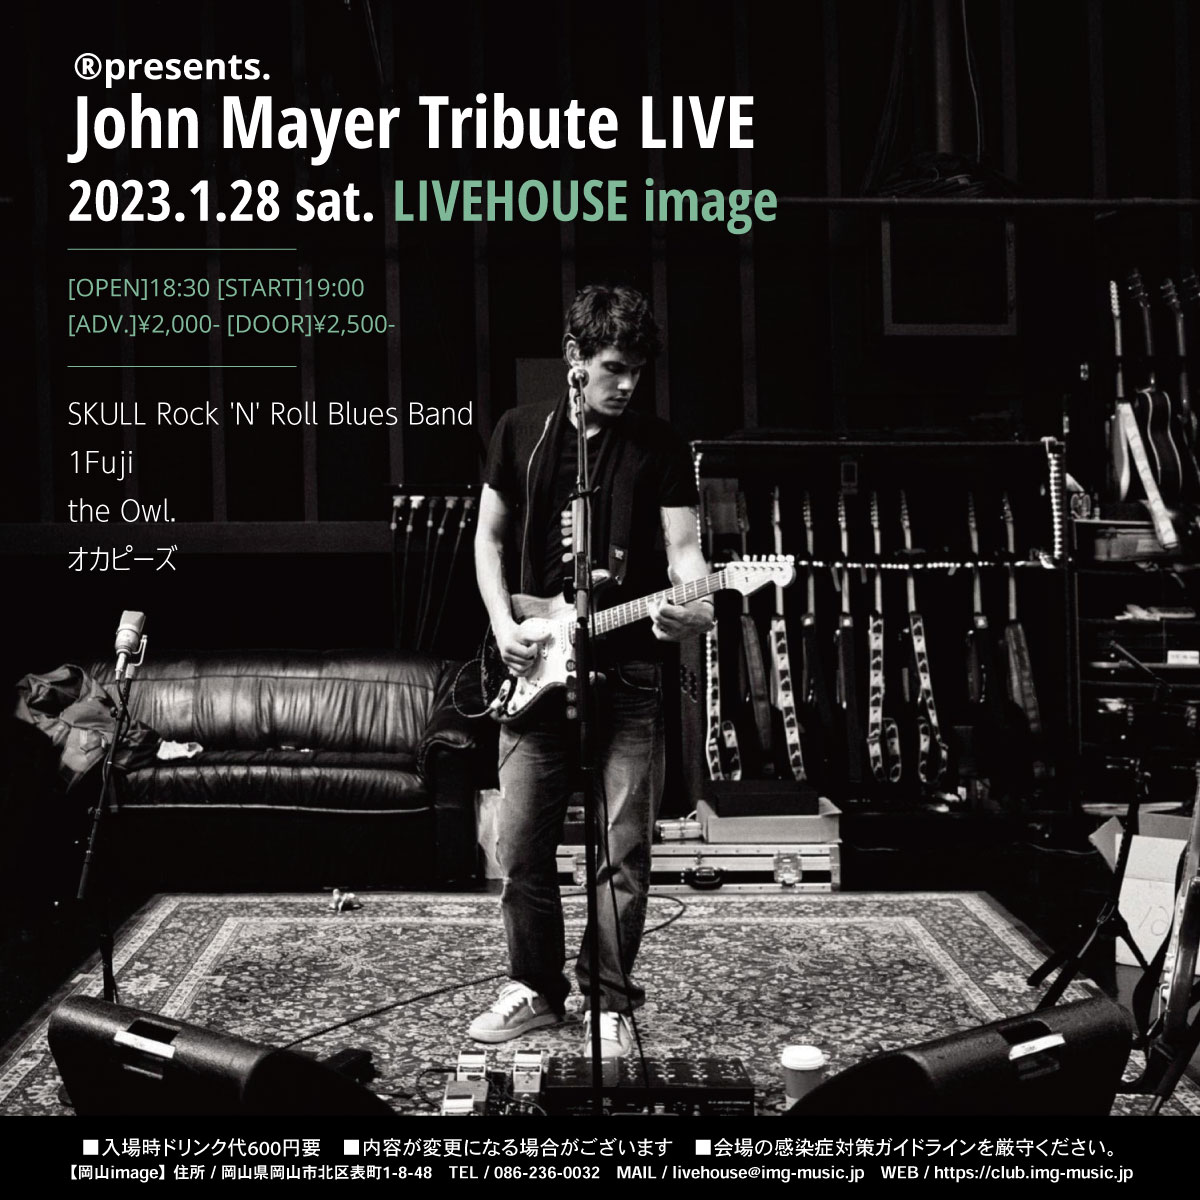 ®presents. John Mayer Tribute LIVE